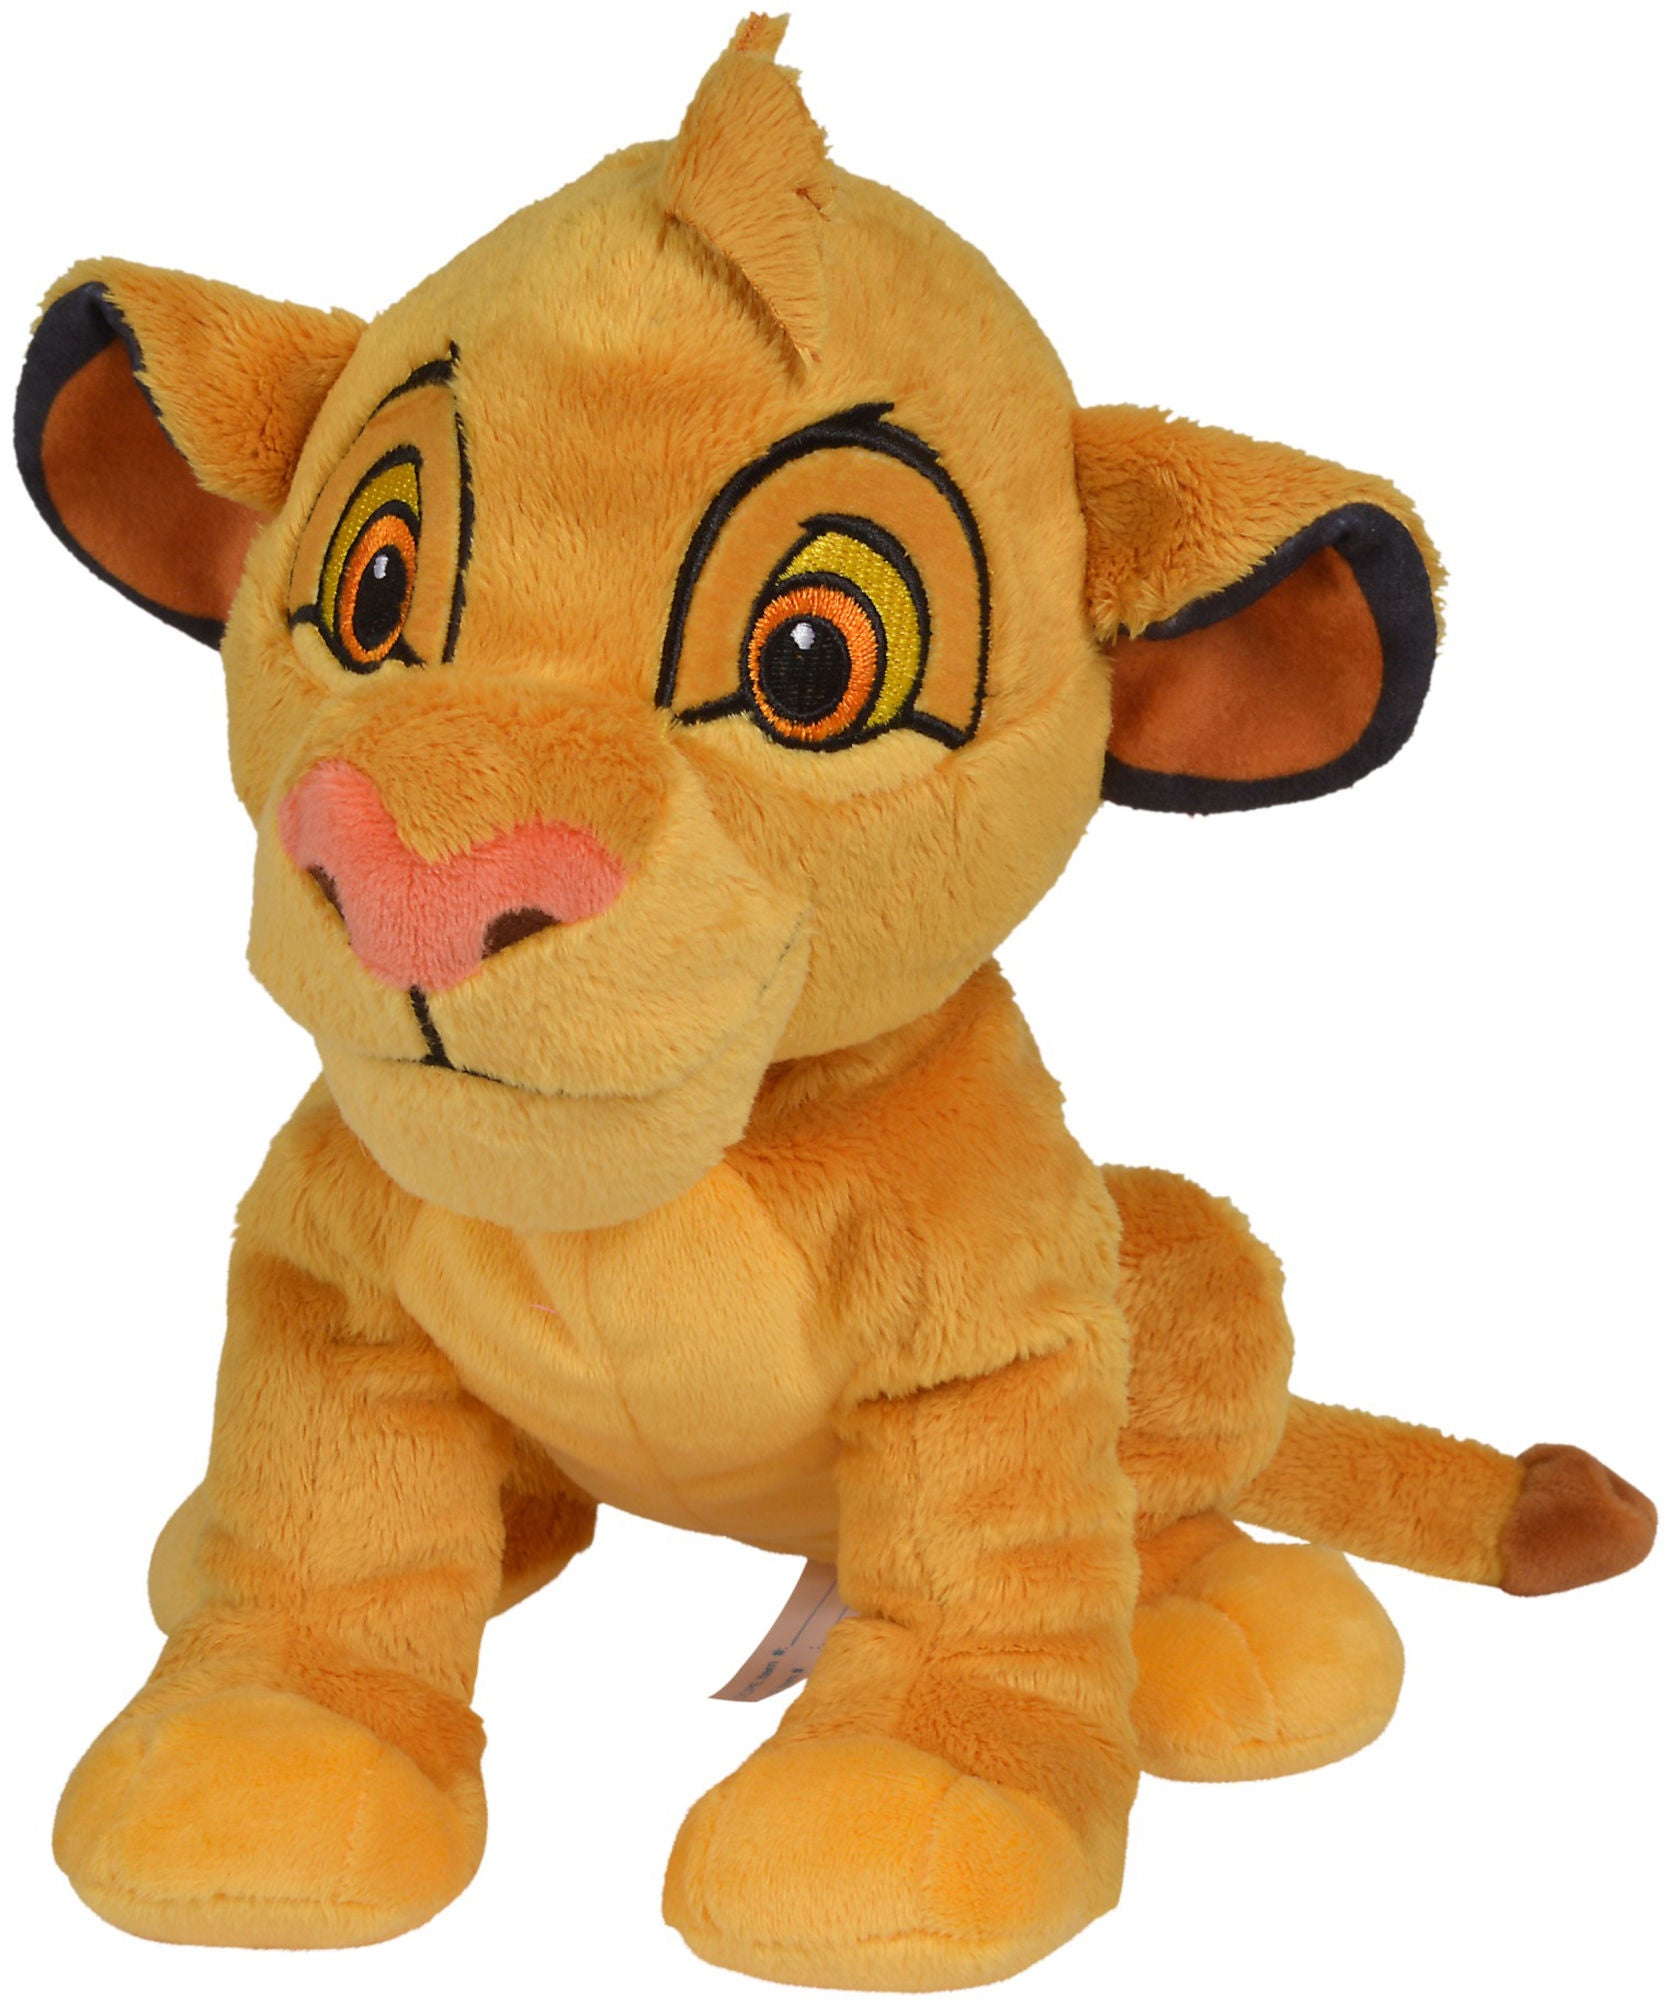 Disney König der Löwen Kuscheltier Simba Plüsch 27 cm von Disney König der Löwen